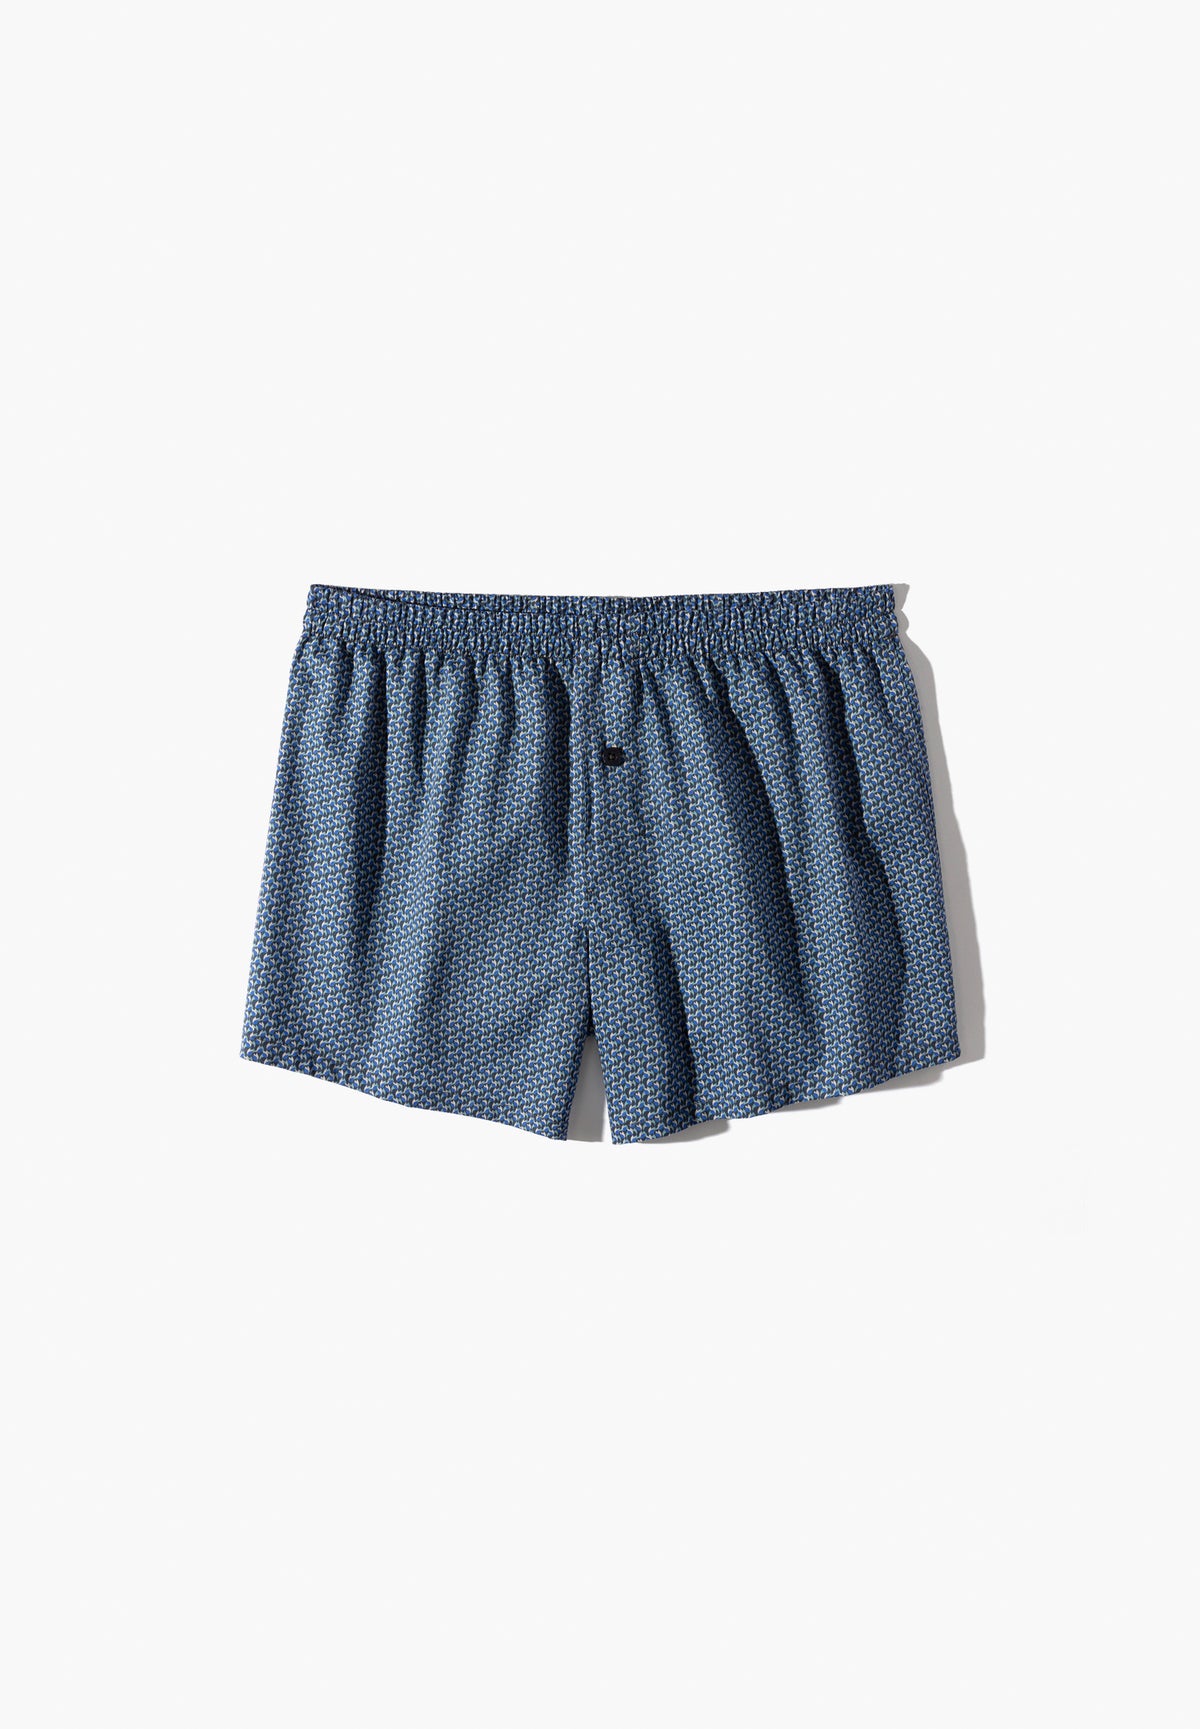 Cotton Sateen Print | Boxer Shorts - fantasy blue